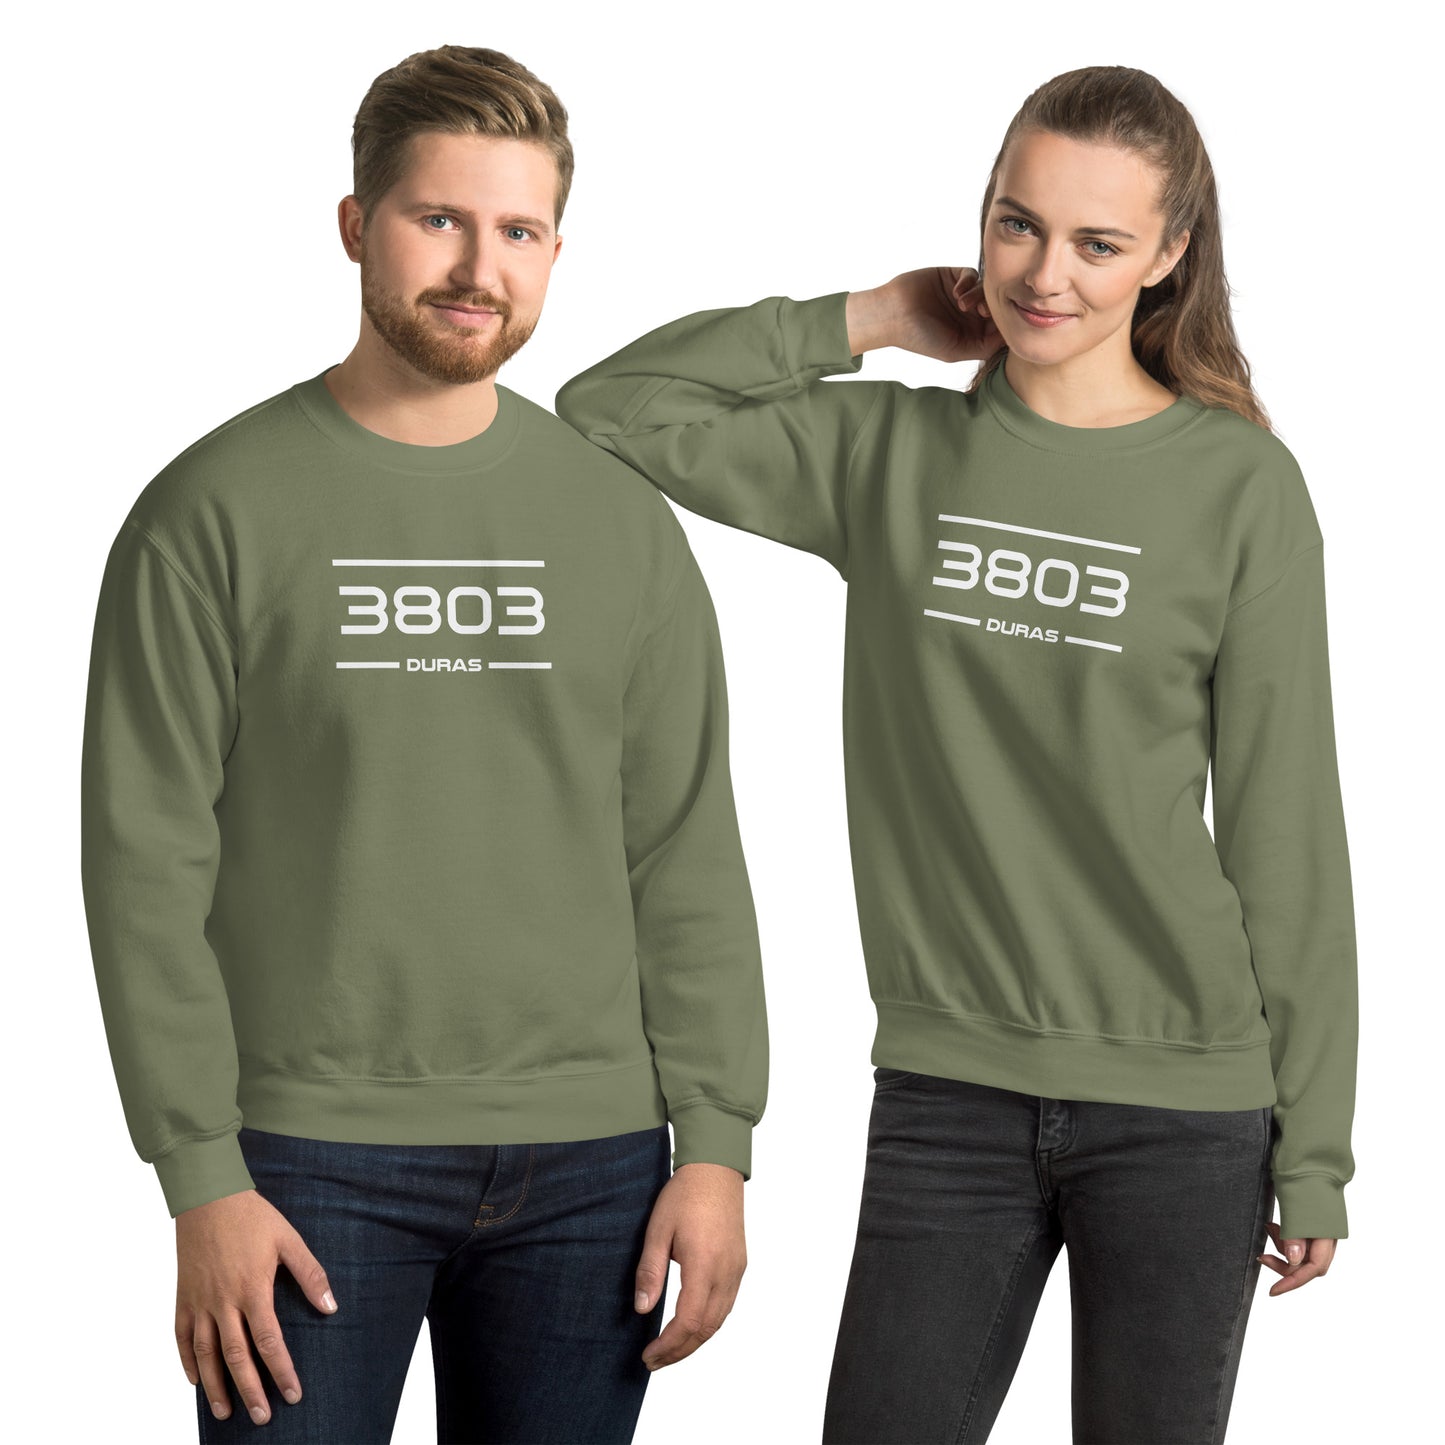 Sweater - 3803 - Duras (M/V)